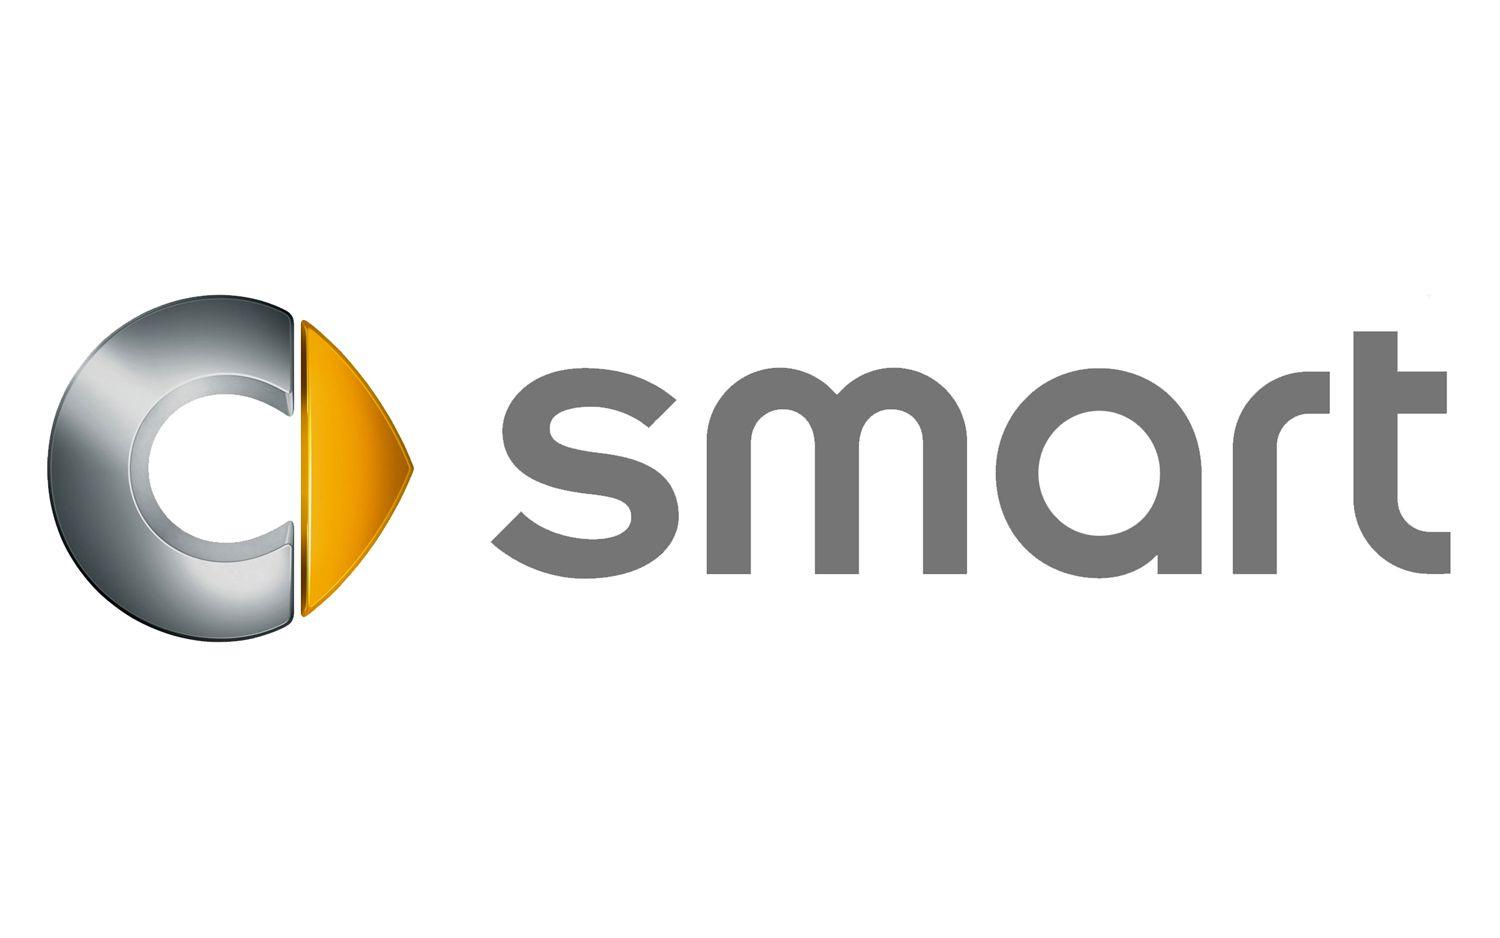 Silver Circle Car Logo - smart Logo, smart Car Symbol Meaning And History | Car Brand Names.com